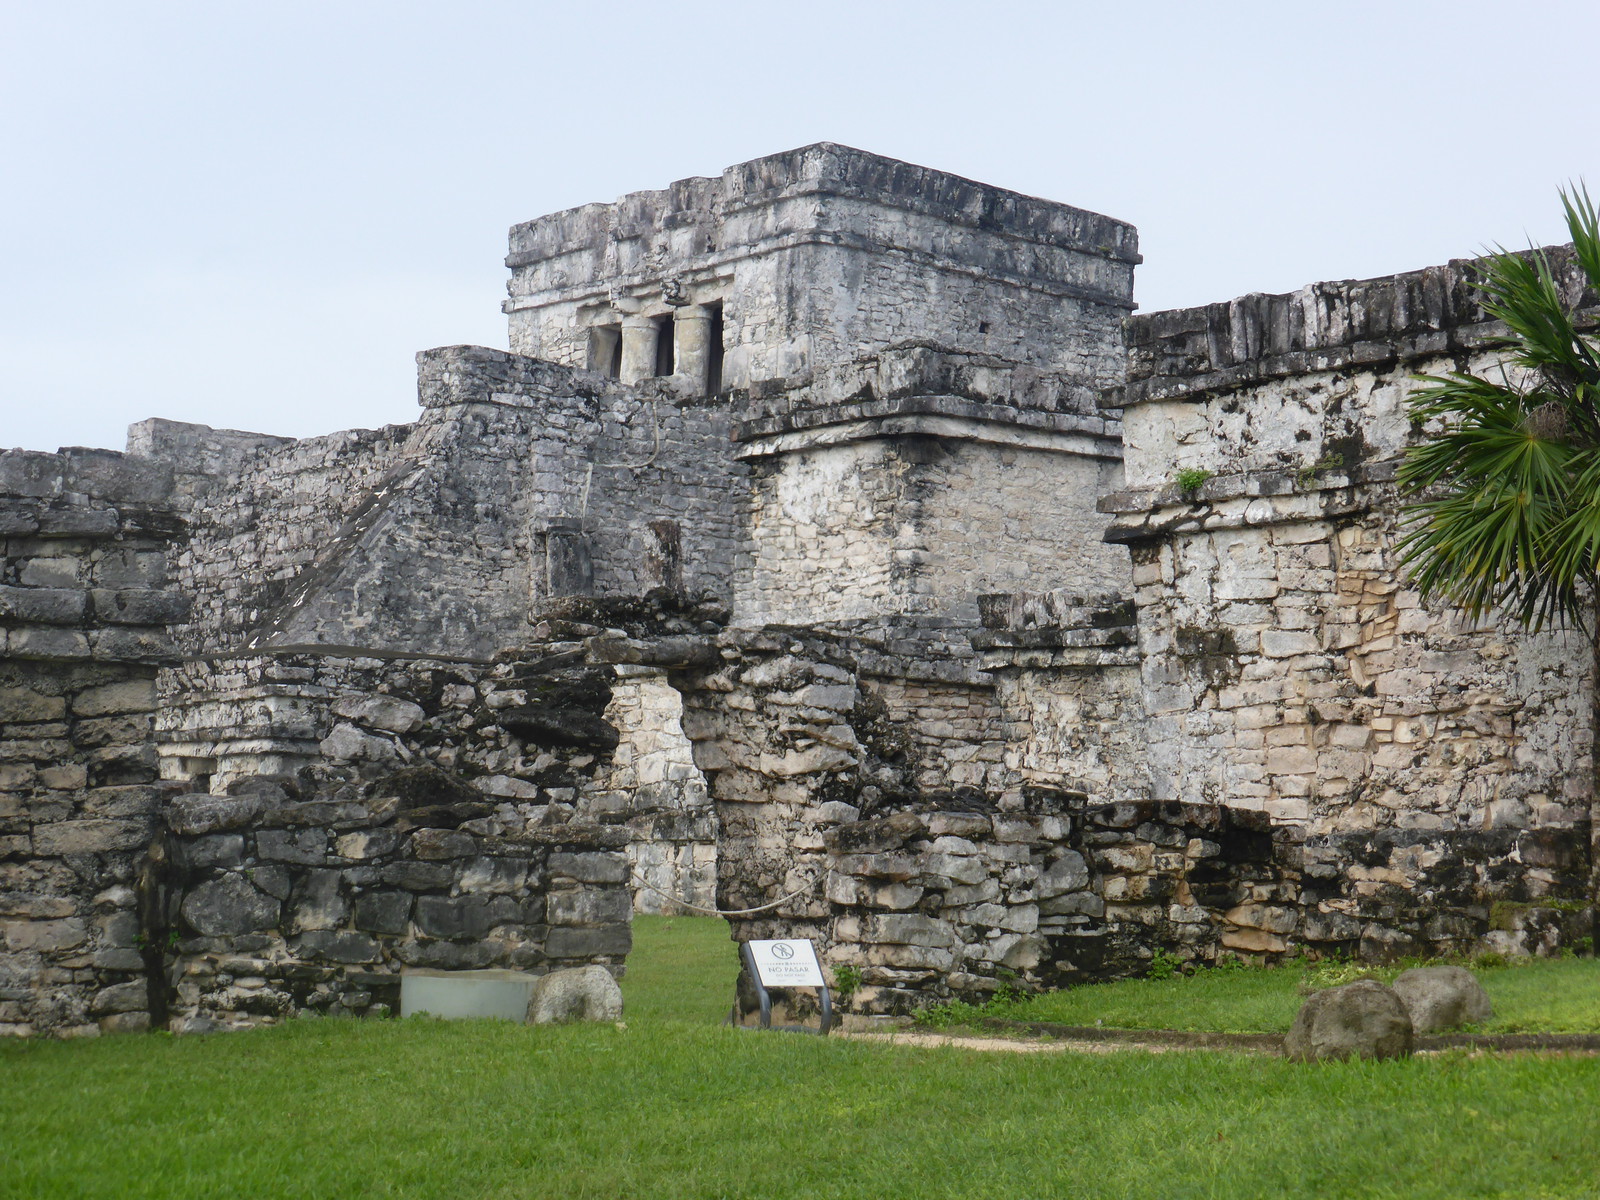 The Castillo dominates the Mayan ruins at Tulum